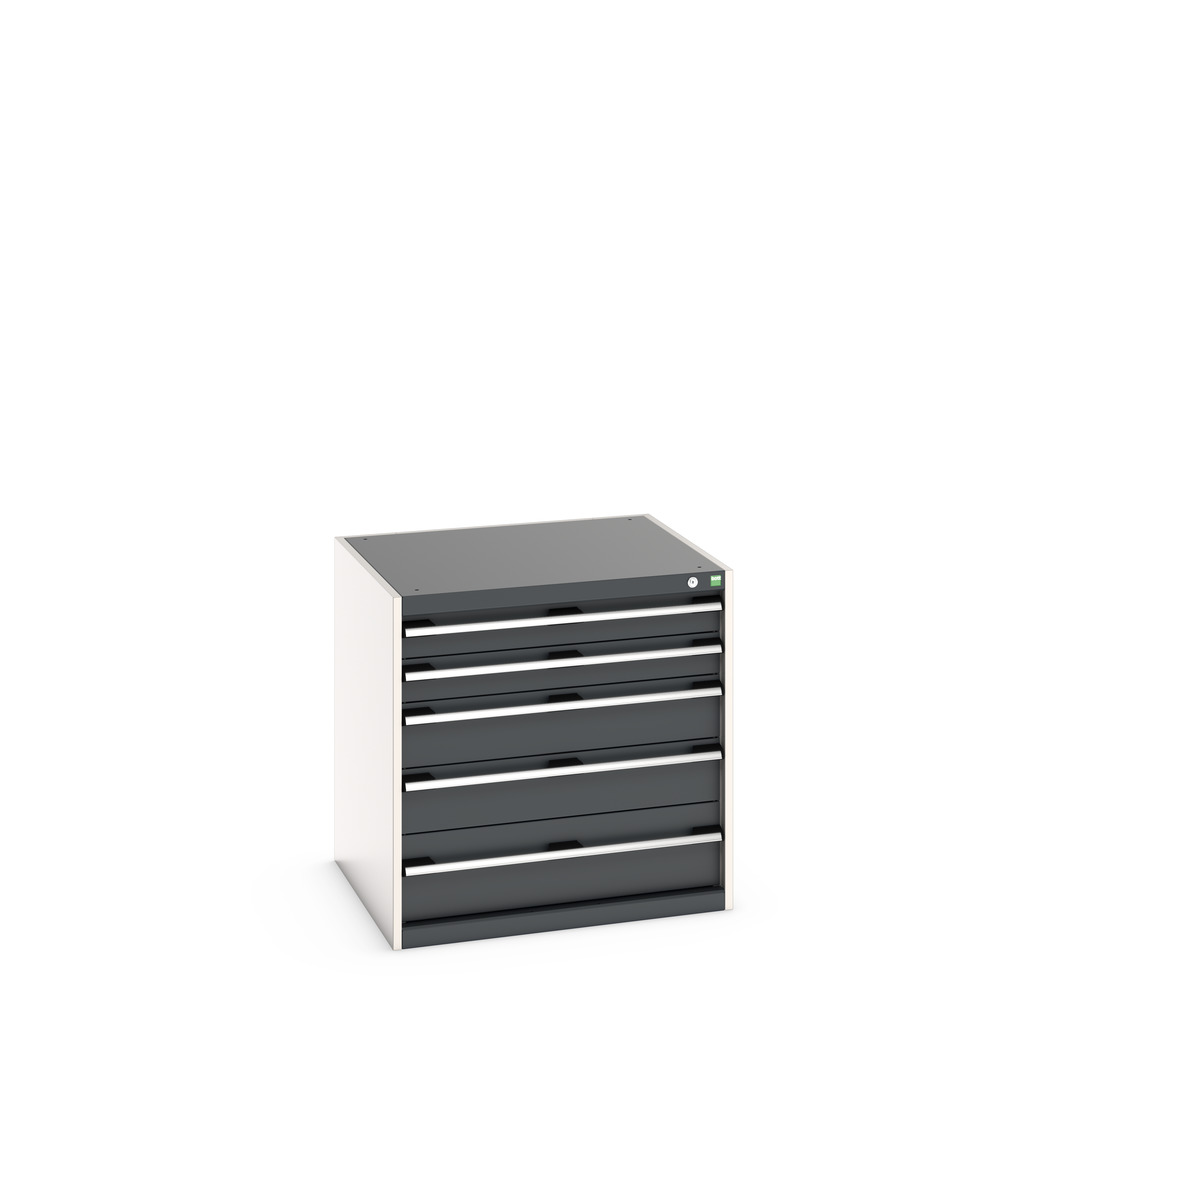 40028012. - cubio drawer cabinet 